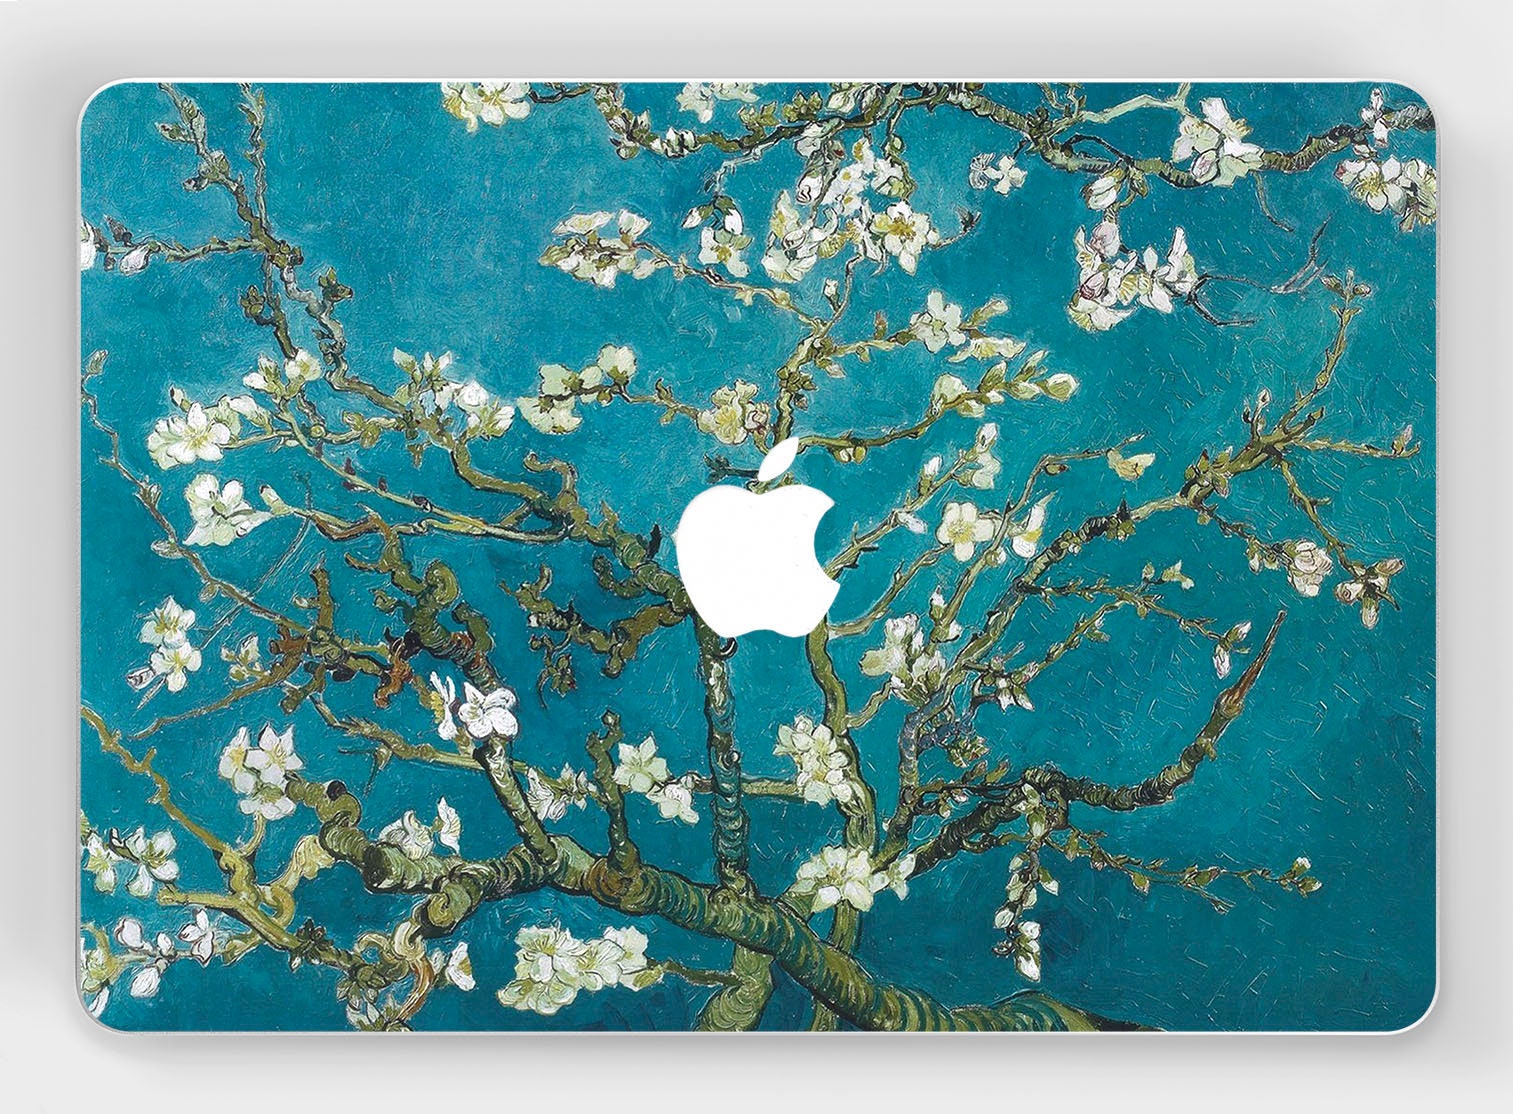 Coque MacBook Air A1932, Van Gogh, La nuit étoilée – Berkin Arts